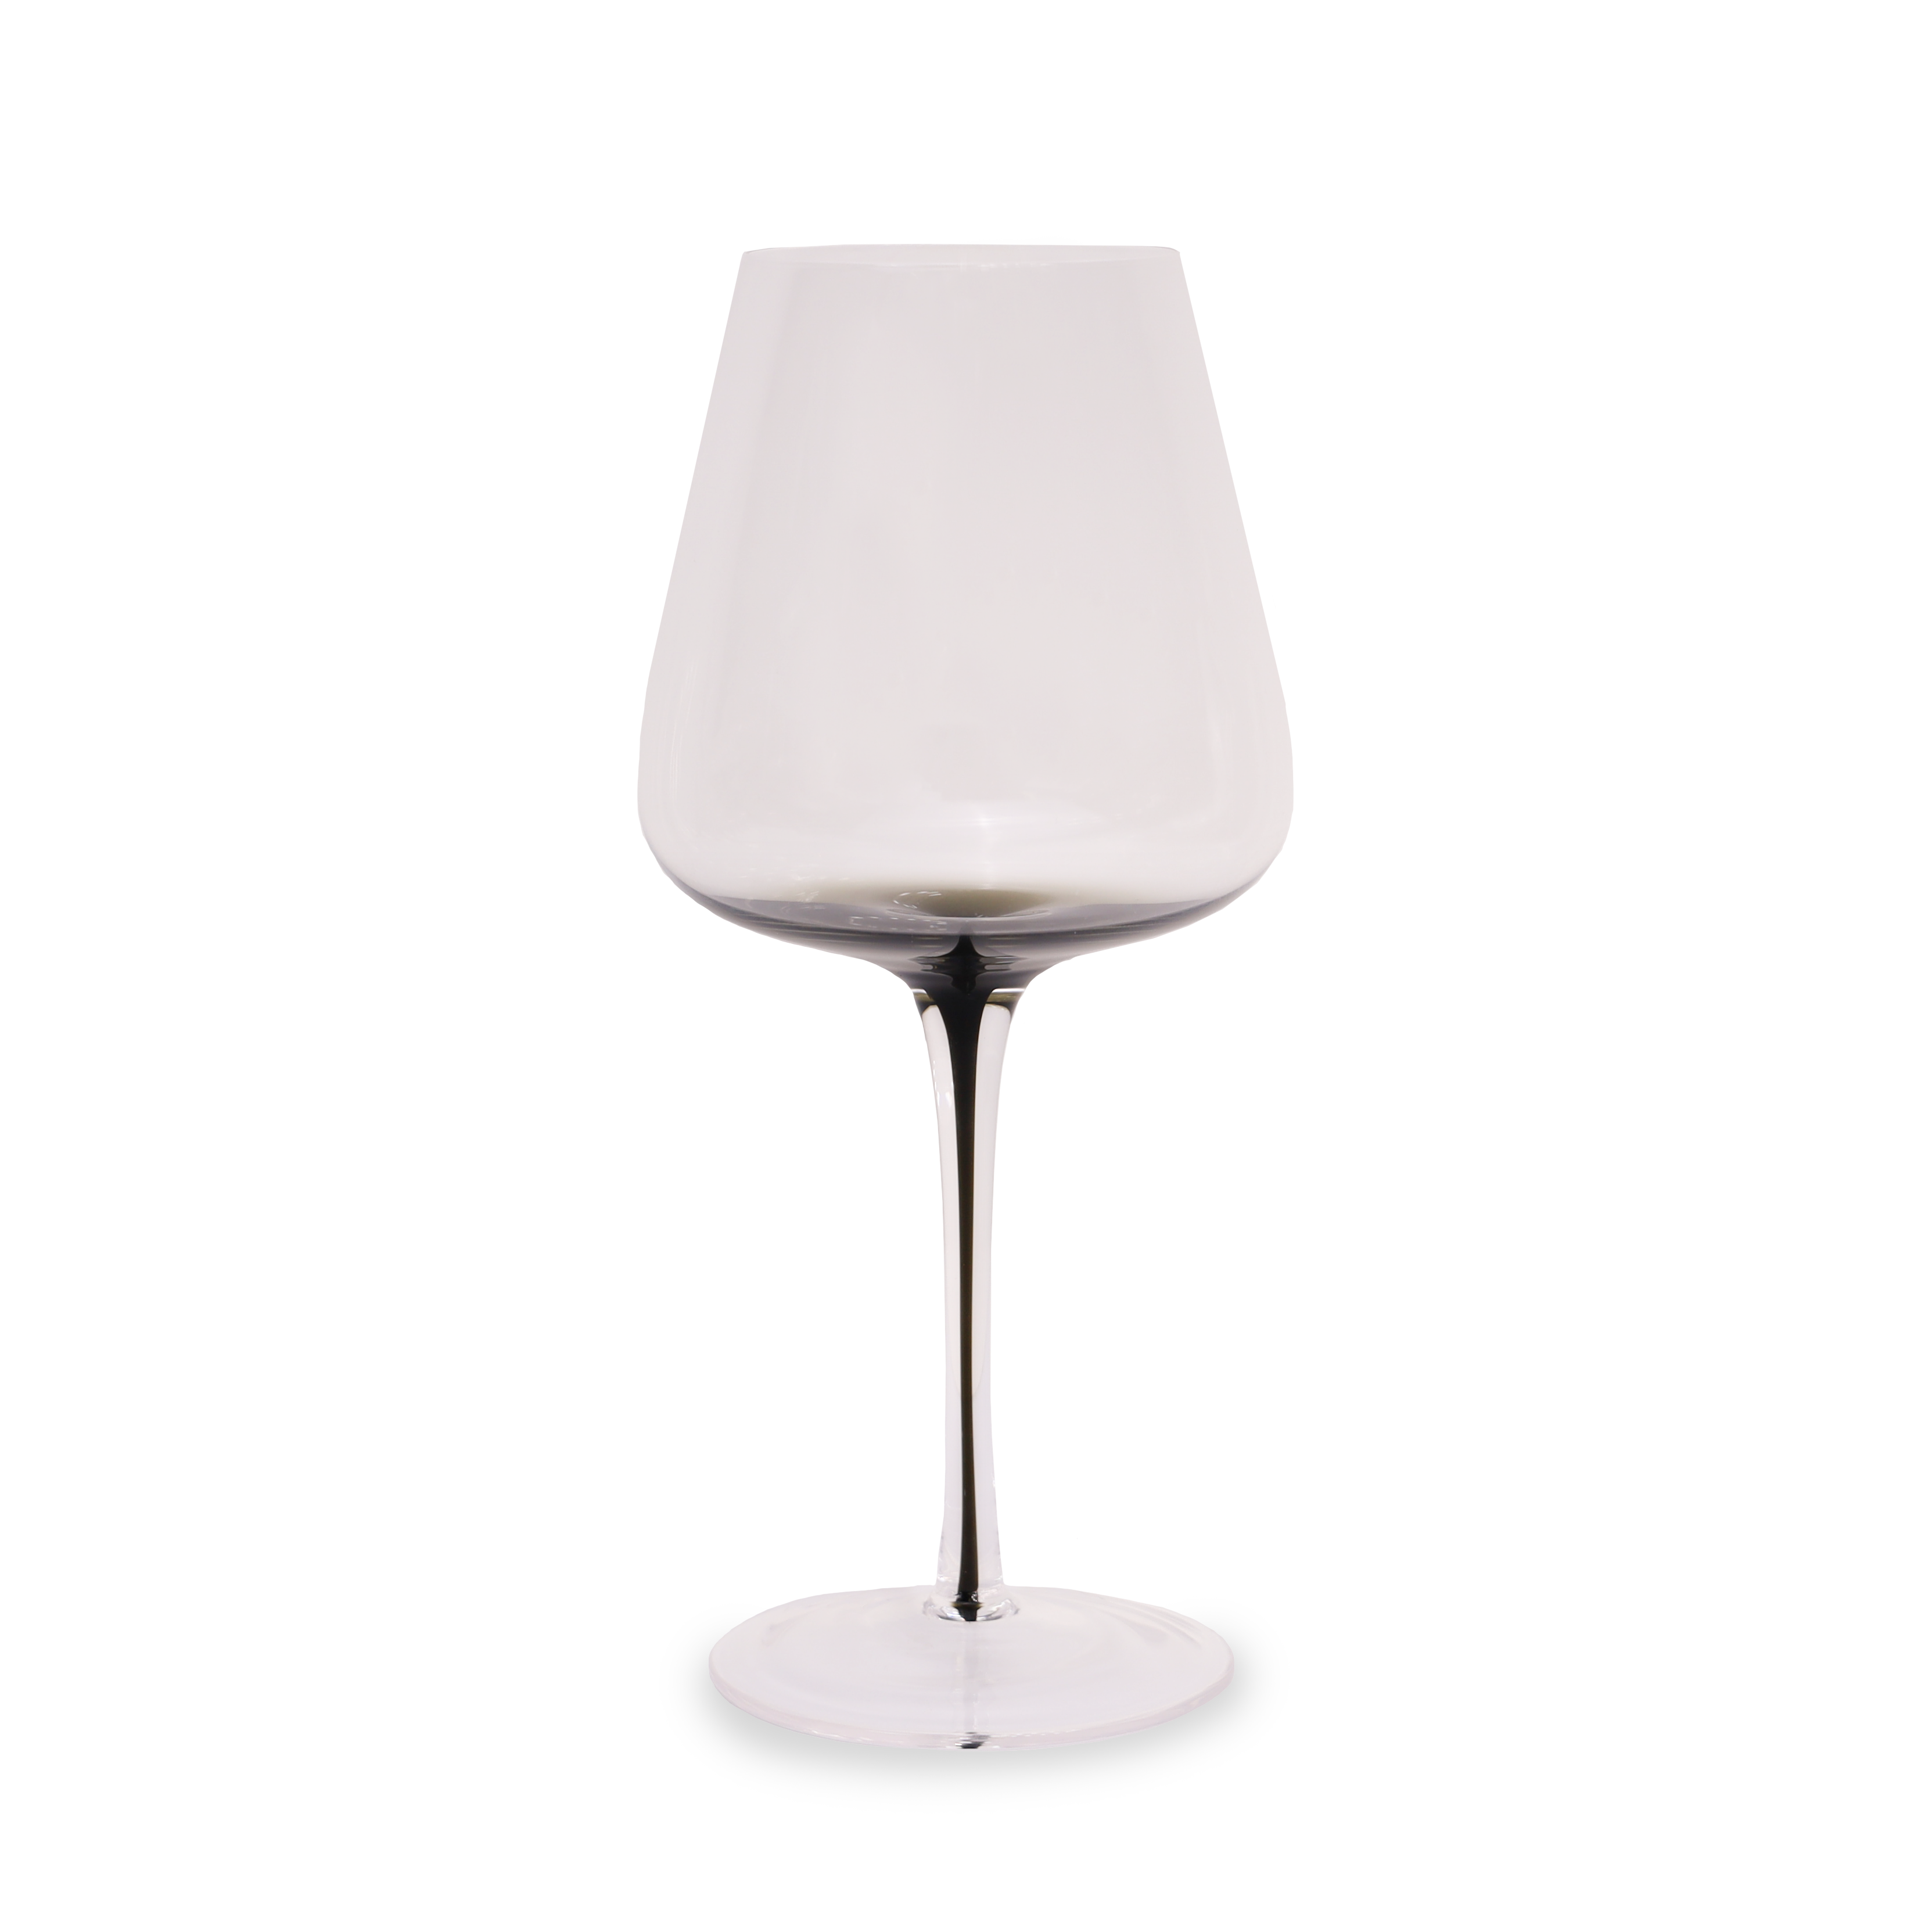 Porsha Smoked Stemware Wine Glass Set